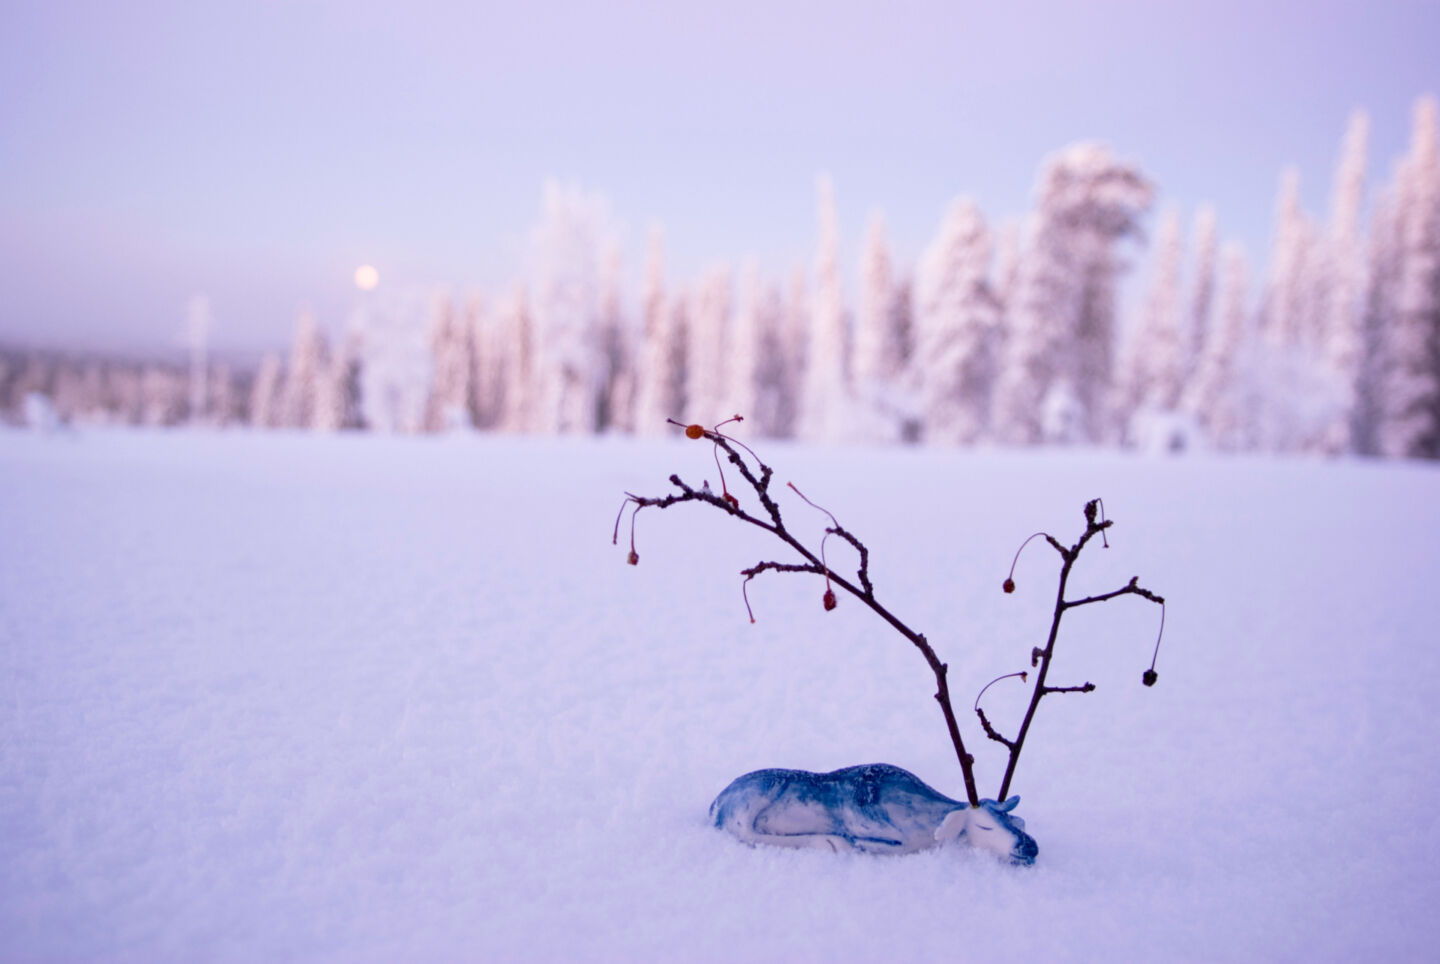 Ceramic reindeer in winter in Posio, Finland